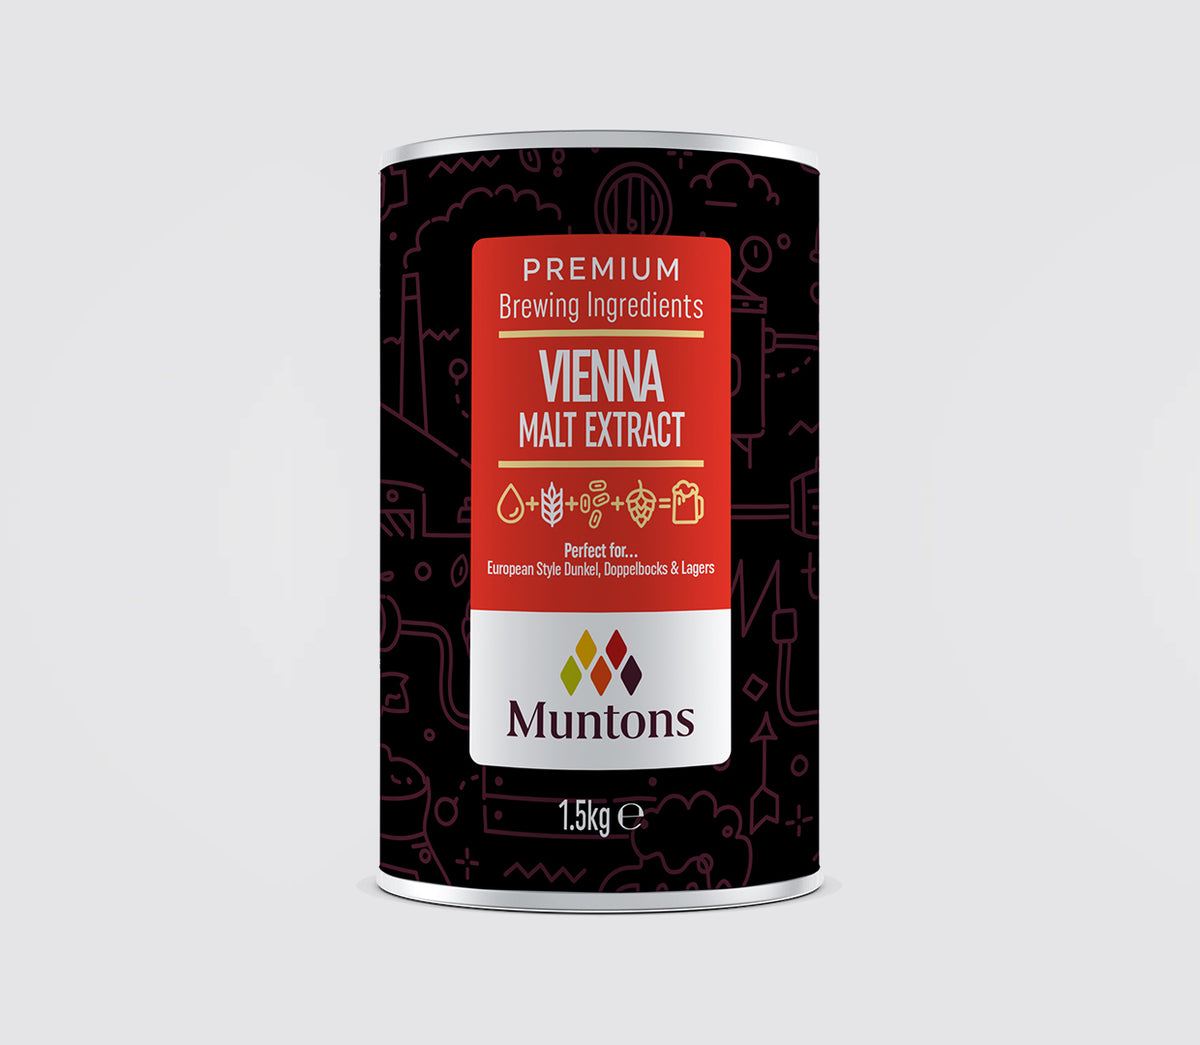 Muntons Vienna Malt Extract 1.5kg - All Things Fermented | Home Brew Shop NZ | Supplies | Equipment